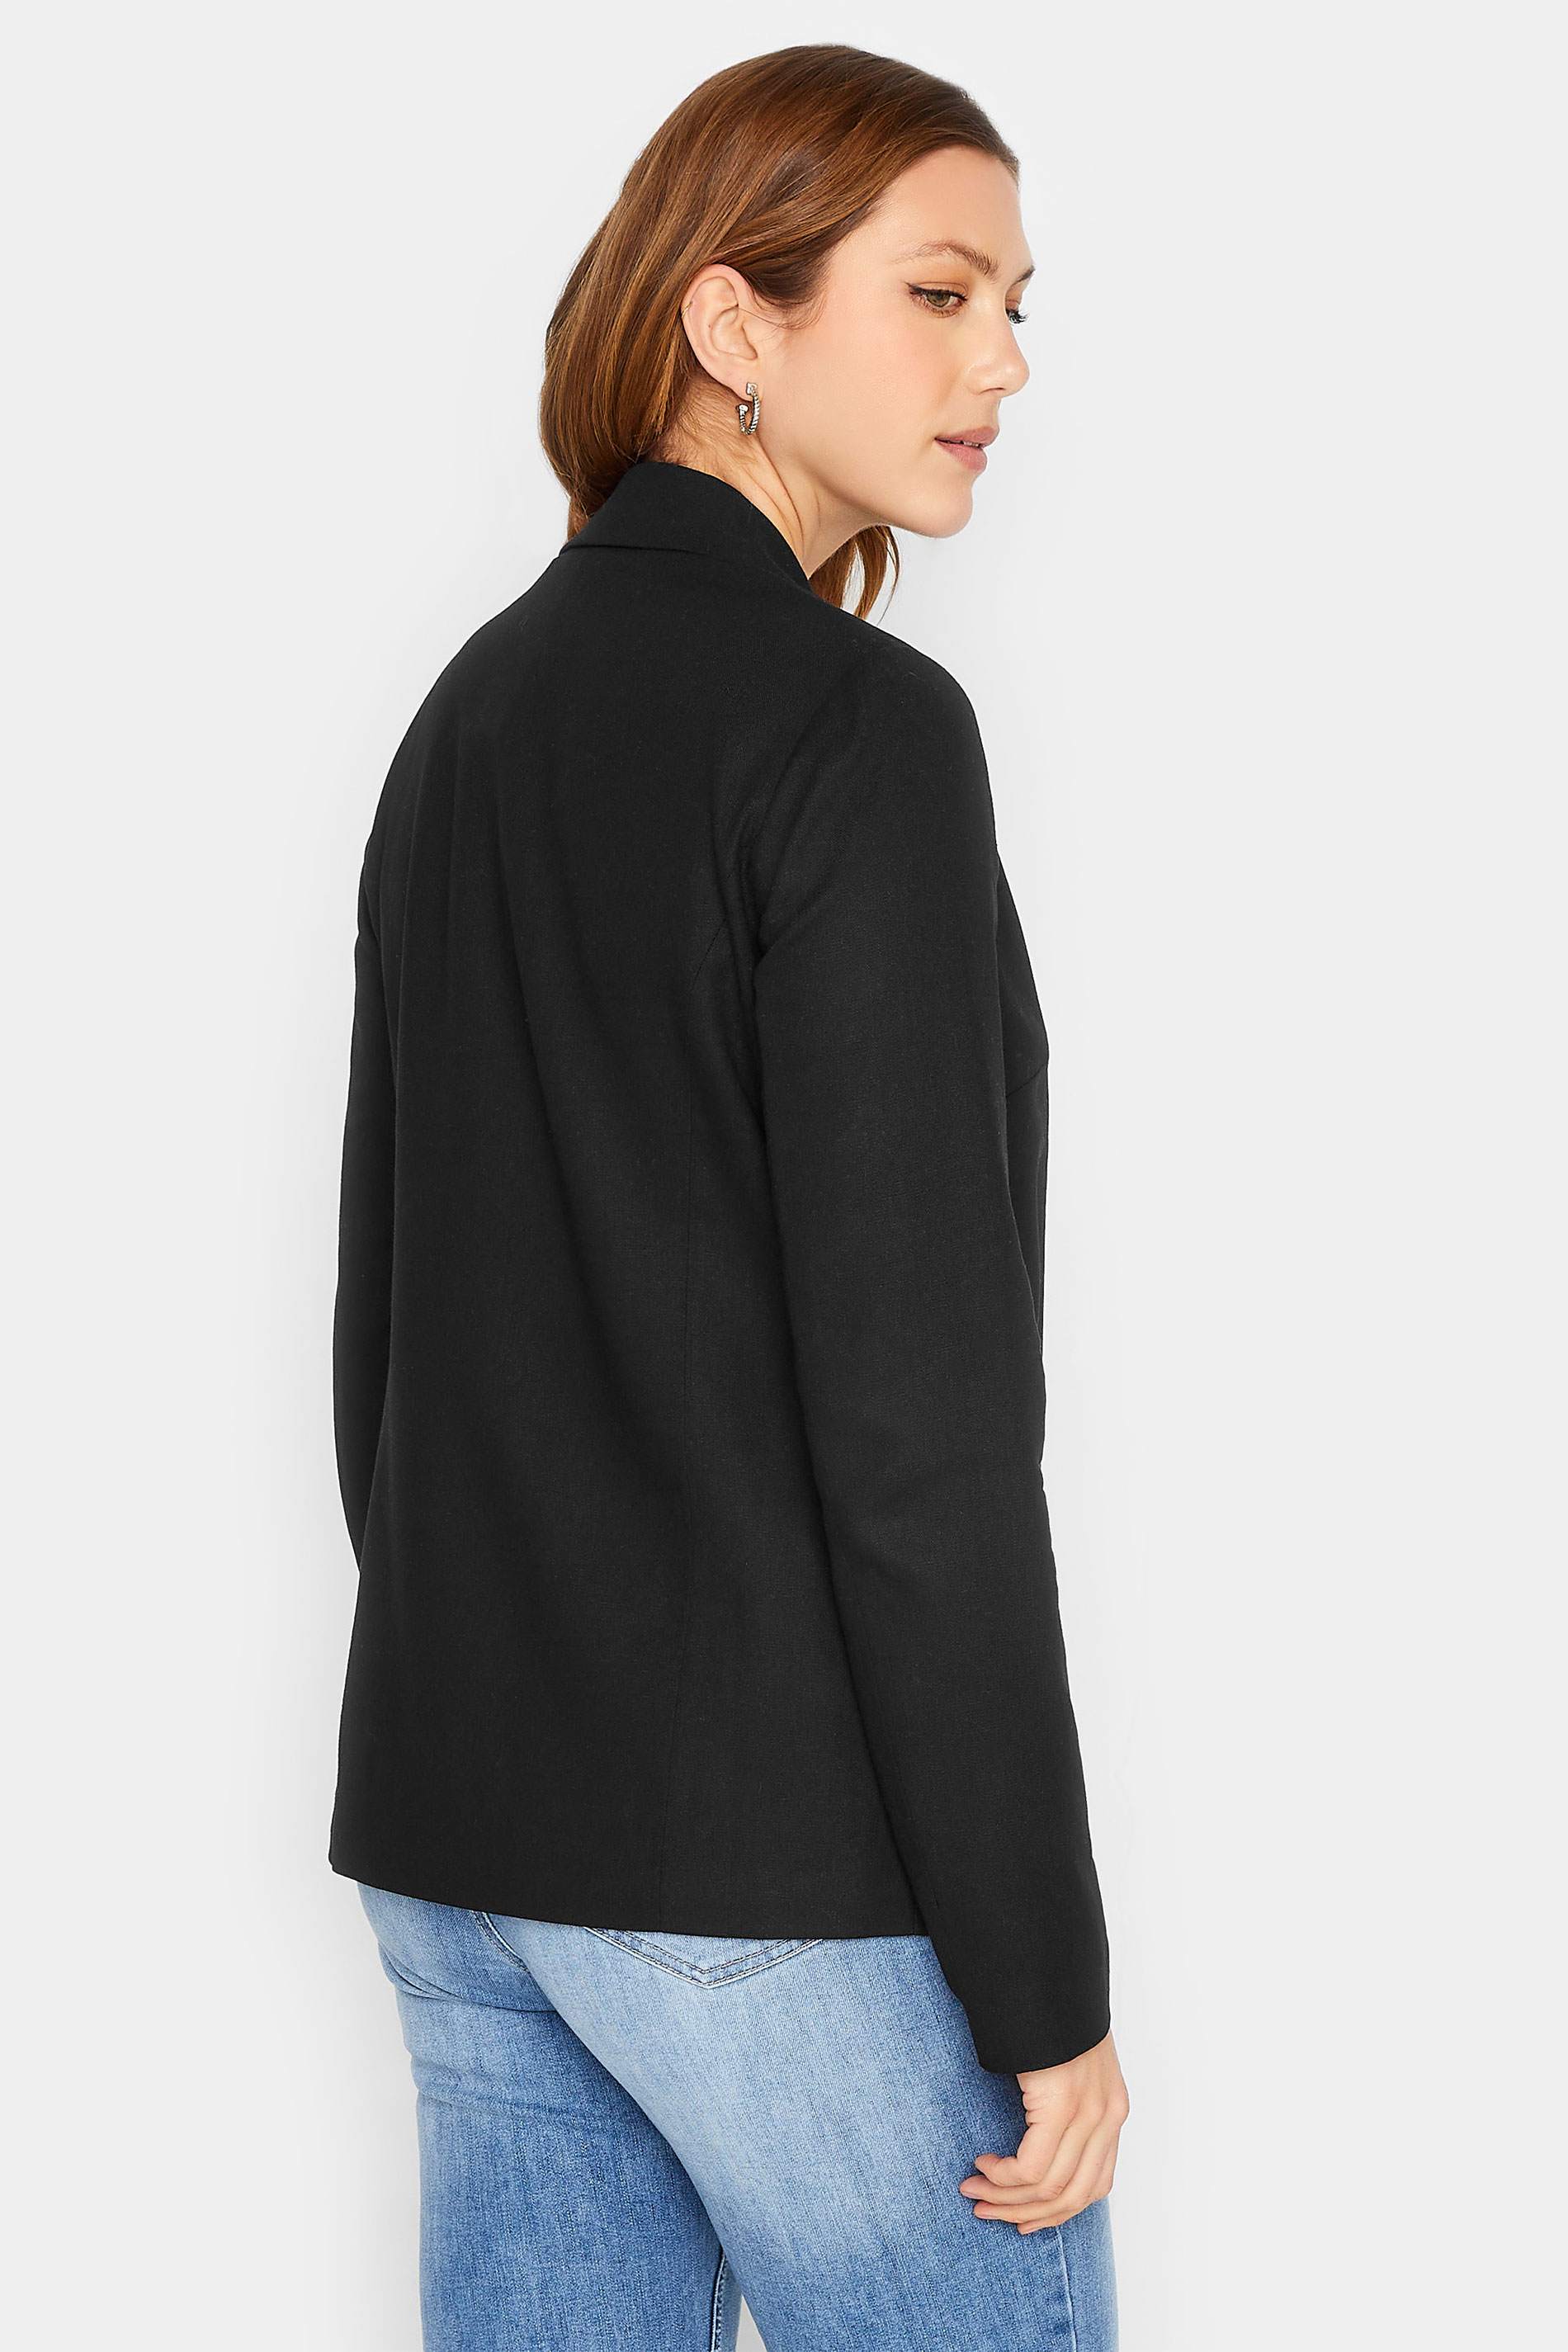 LTS Tall Black Linen Look Blazer Jacket | Long Tall Sally  3